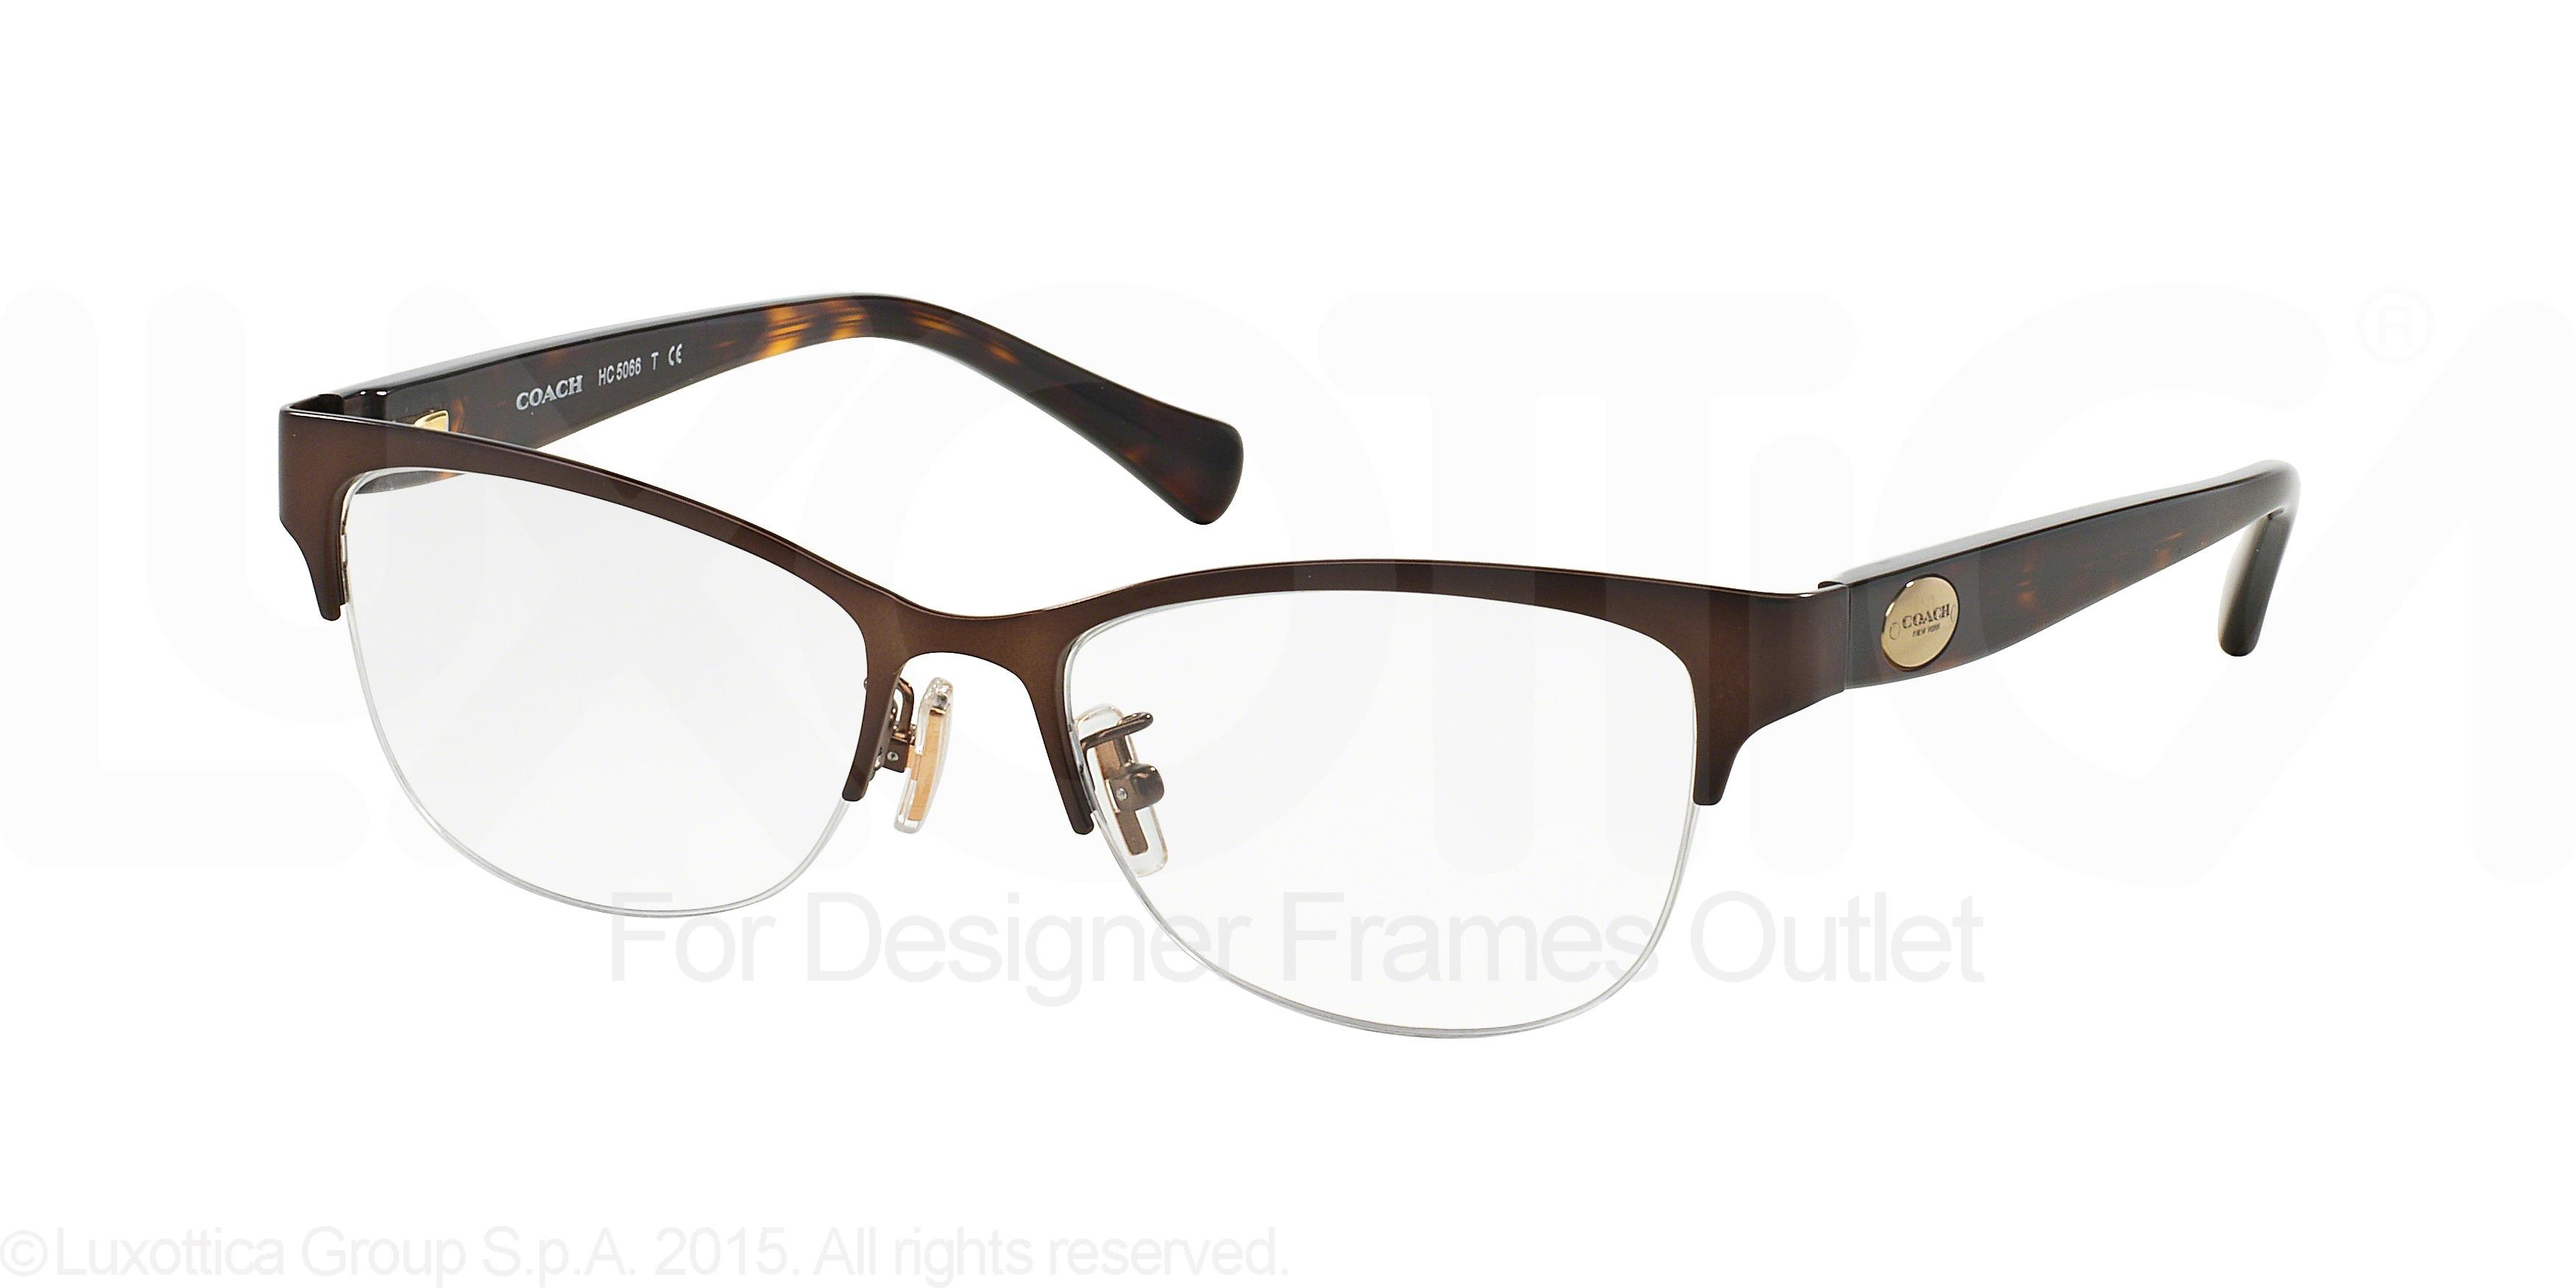 Coach Women's HC5066 Eyeglasses Satin Brown/Dark Tortoise 53mm - image 1 of 3